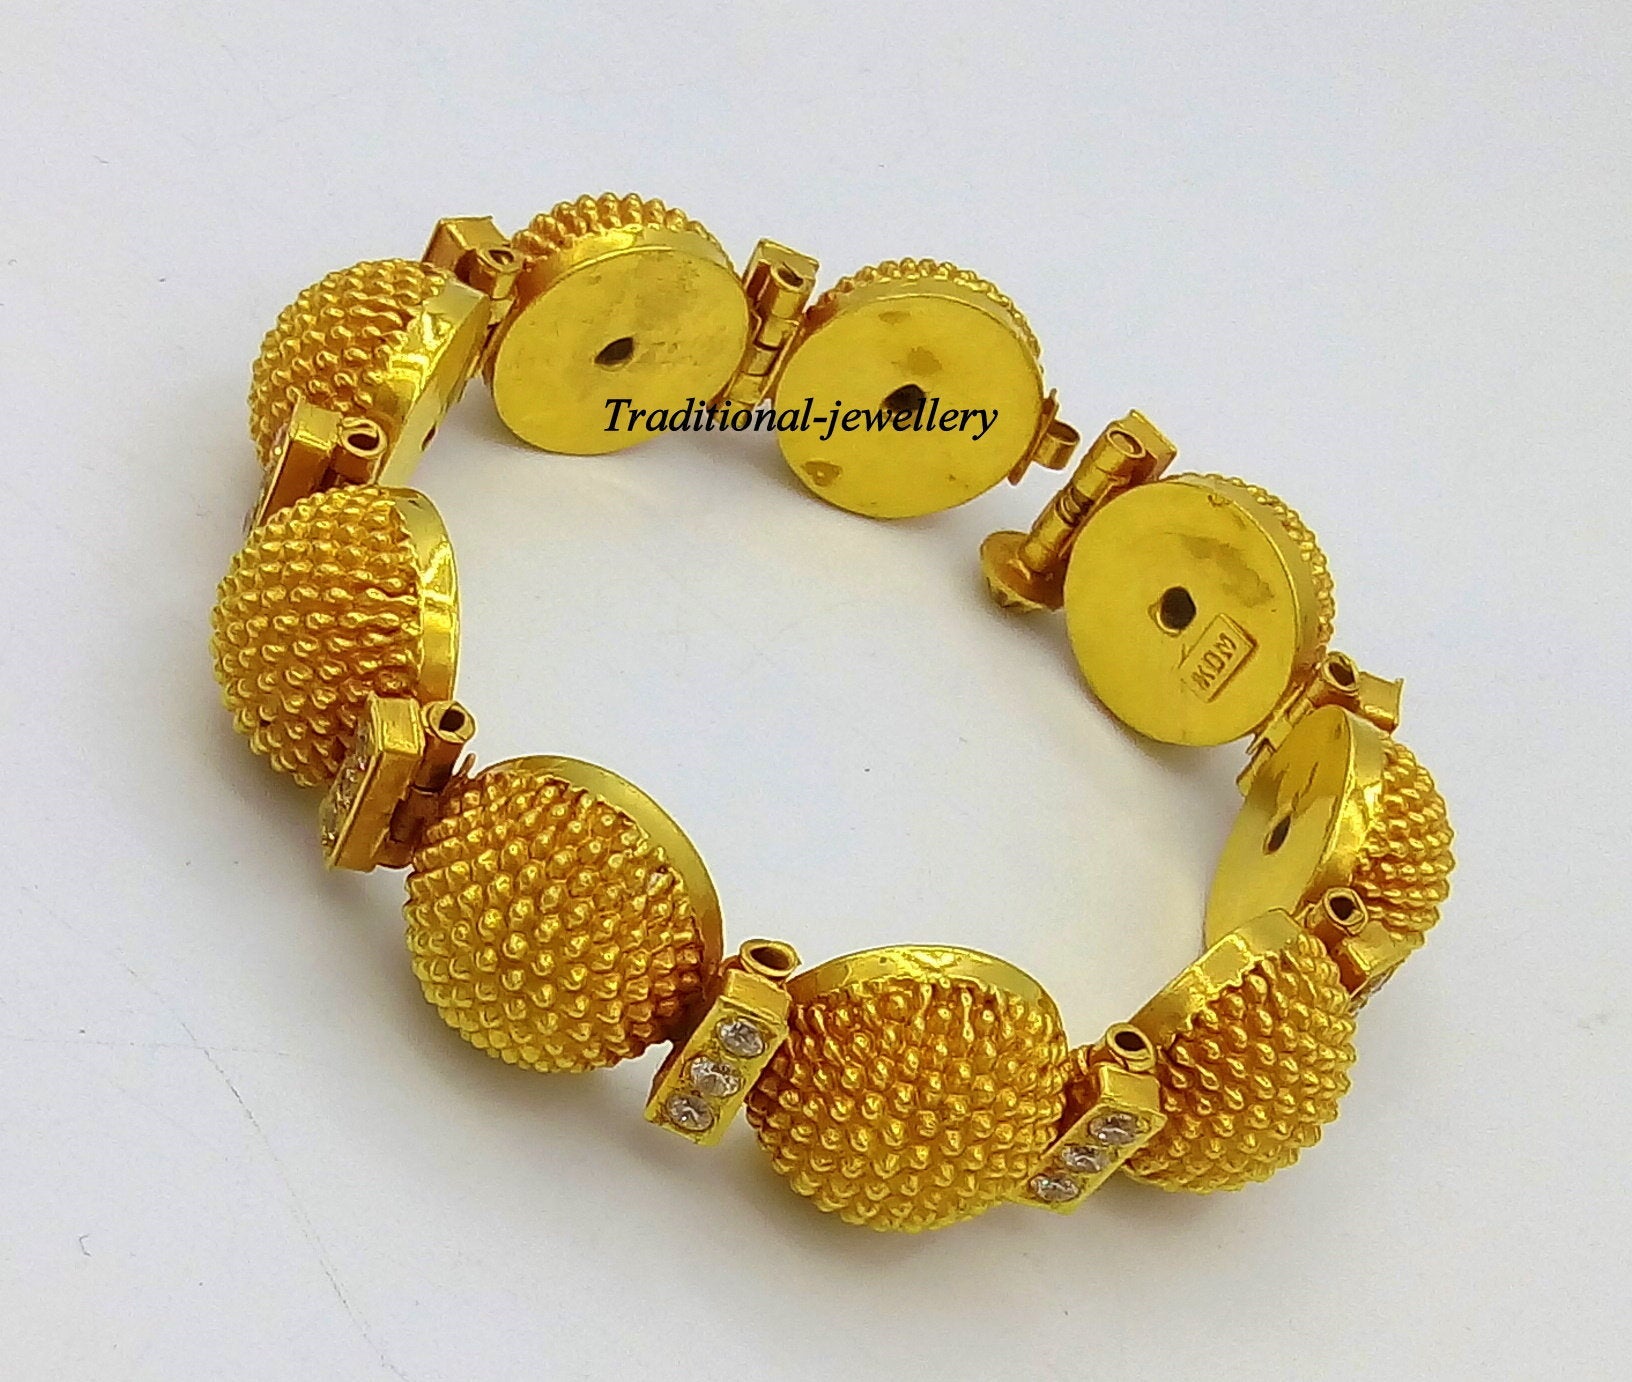 22k yellow gold handmade Top class rajasthani bangle bracelet Gajara traditional wedding anniversary party belly dance jewelry g03 - TRIBAL ORNAMENTS